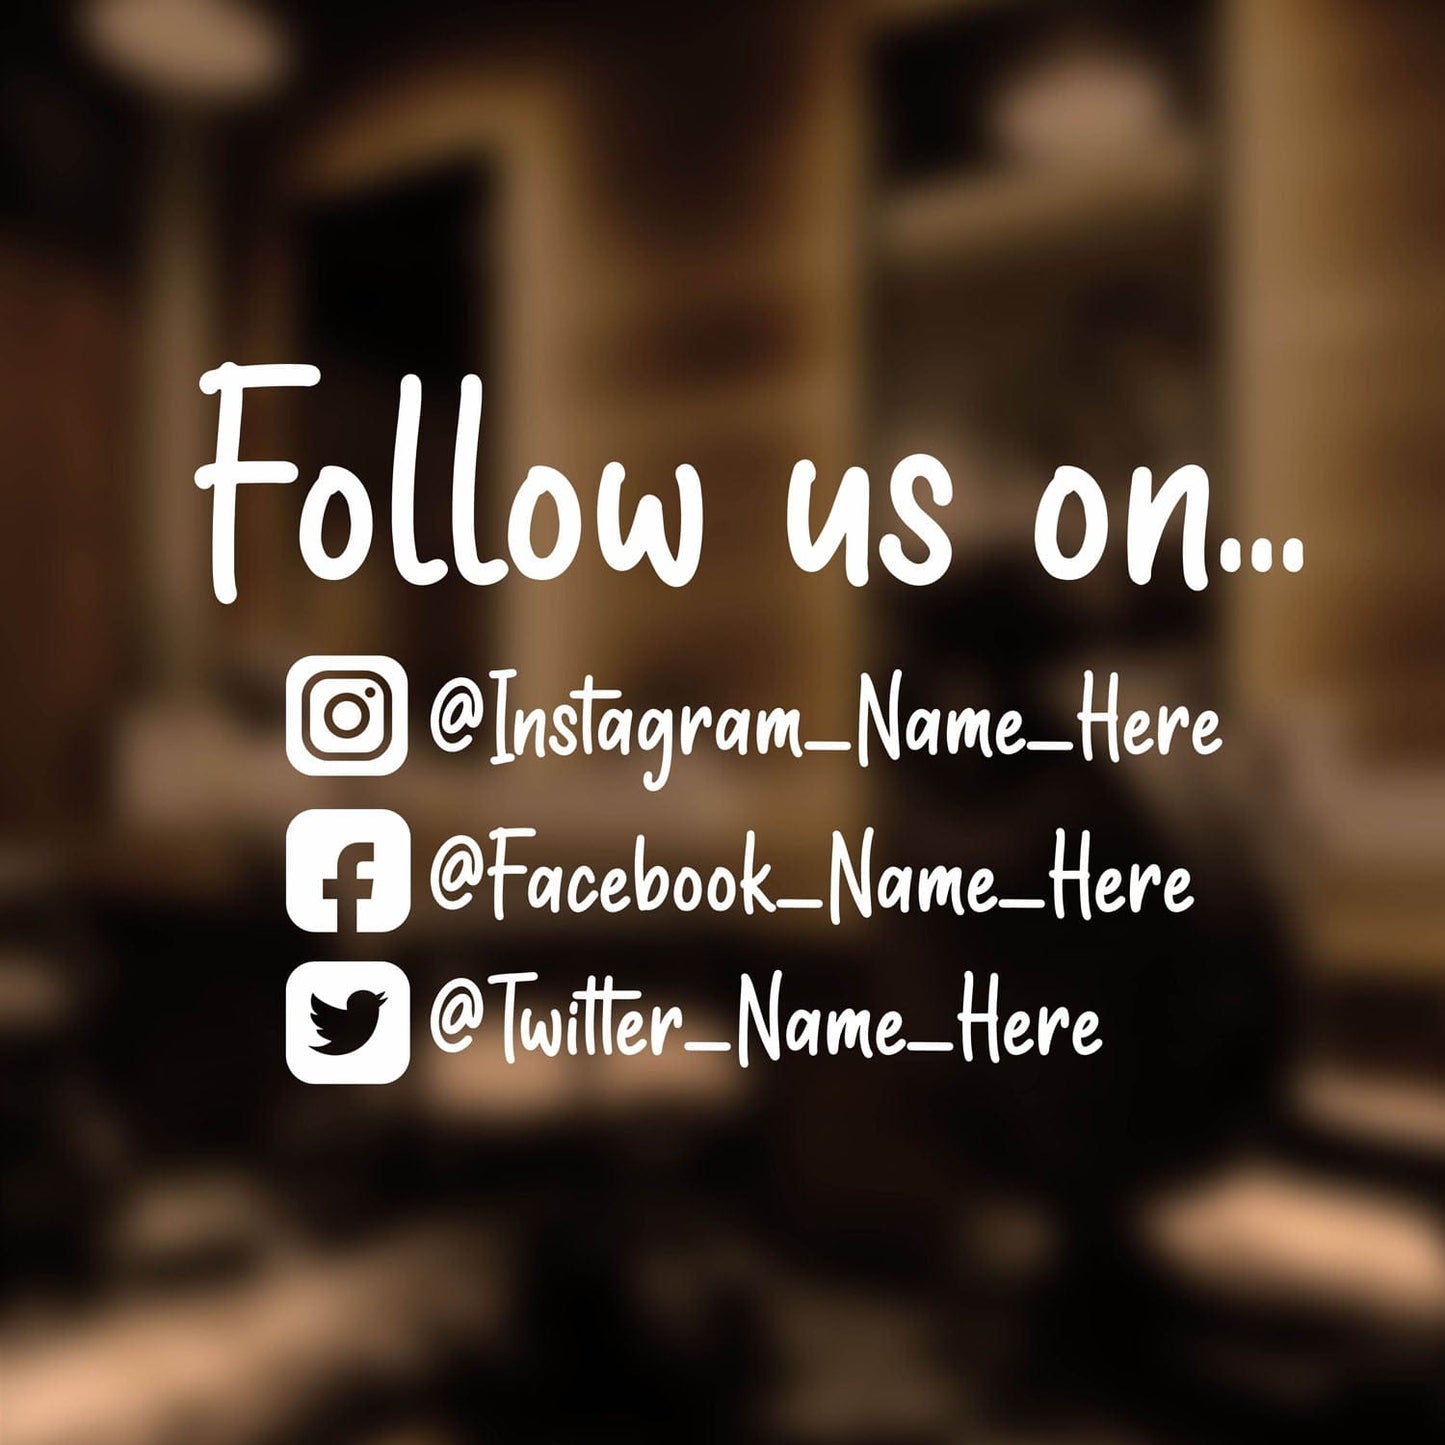 Follow us on - Social Media Signage